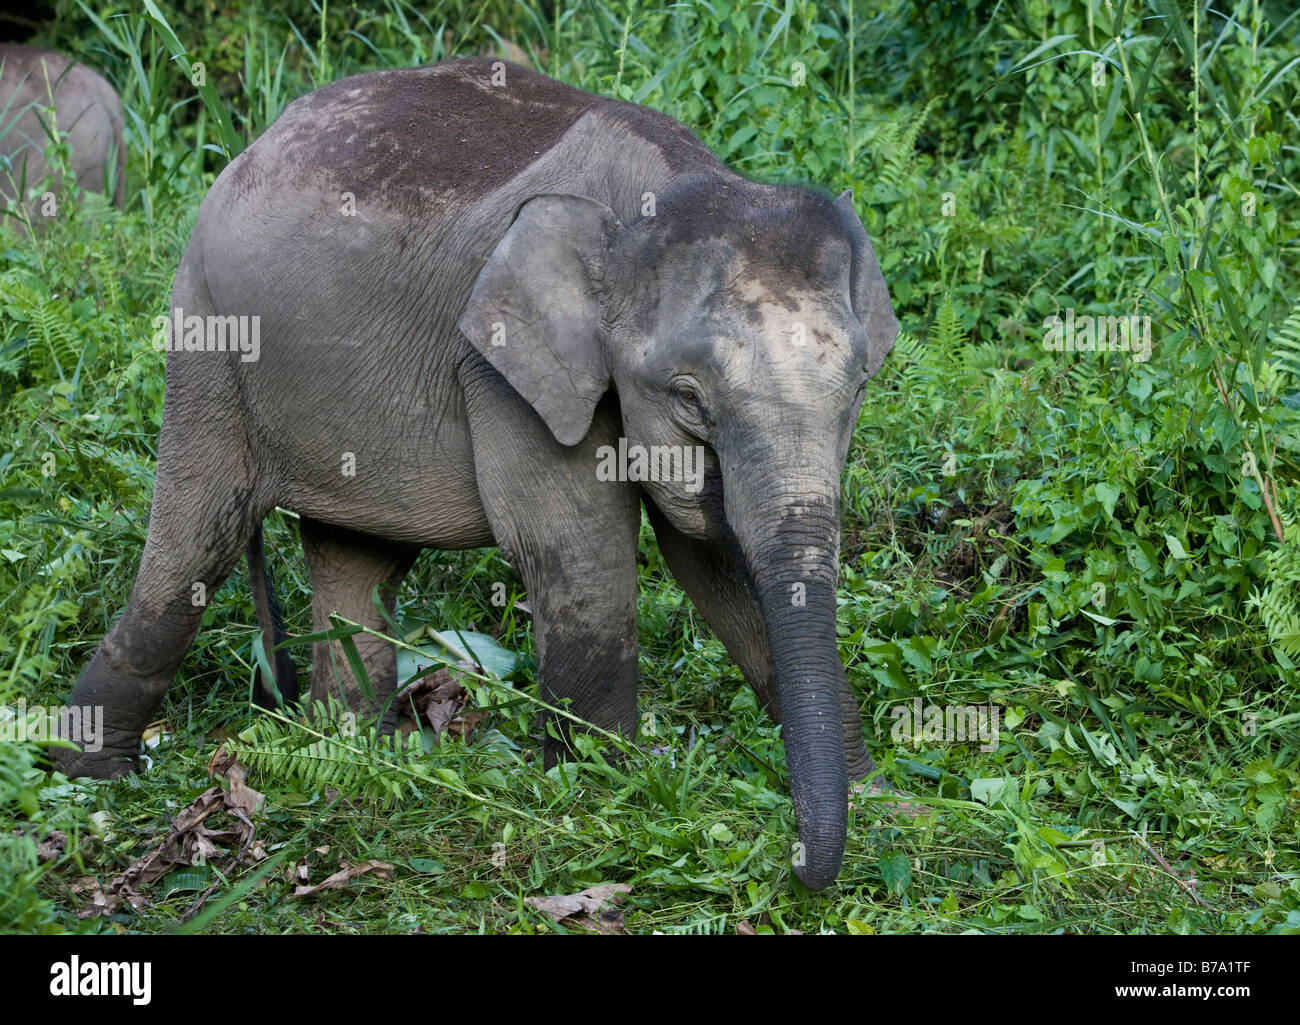 Pygmy Elephant (Elephas maximus borneensis) in Jungle. Kinabatang, Borneo, Asia Stock Photo